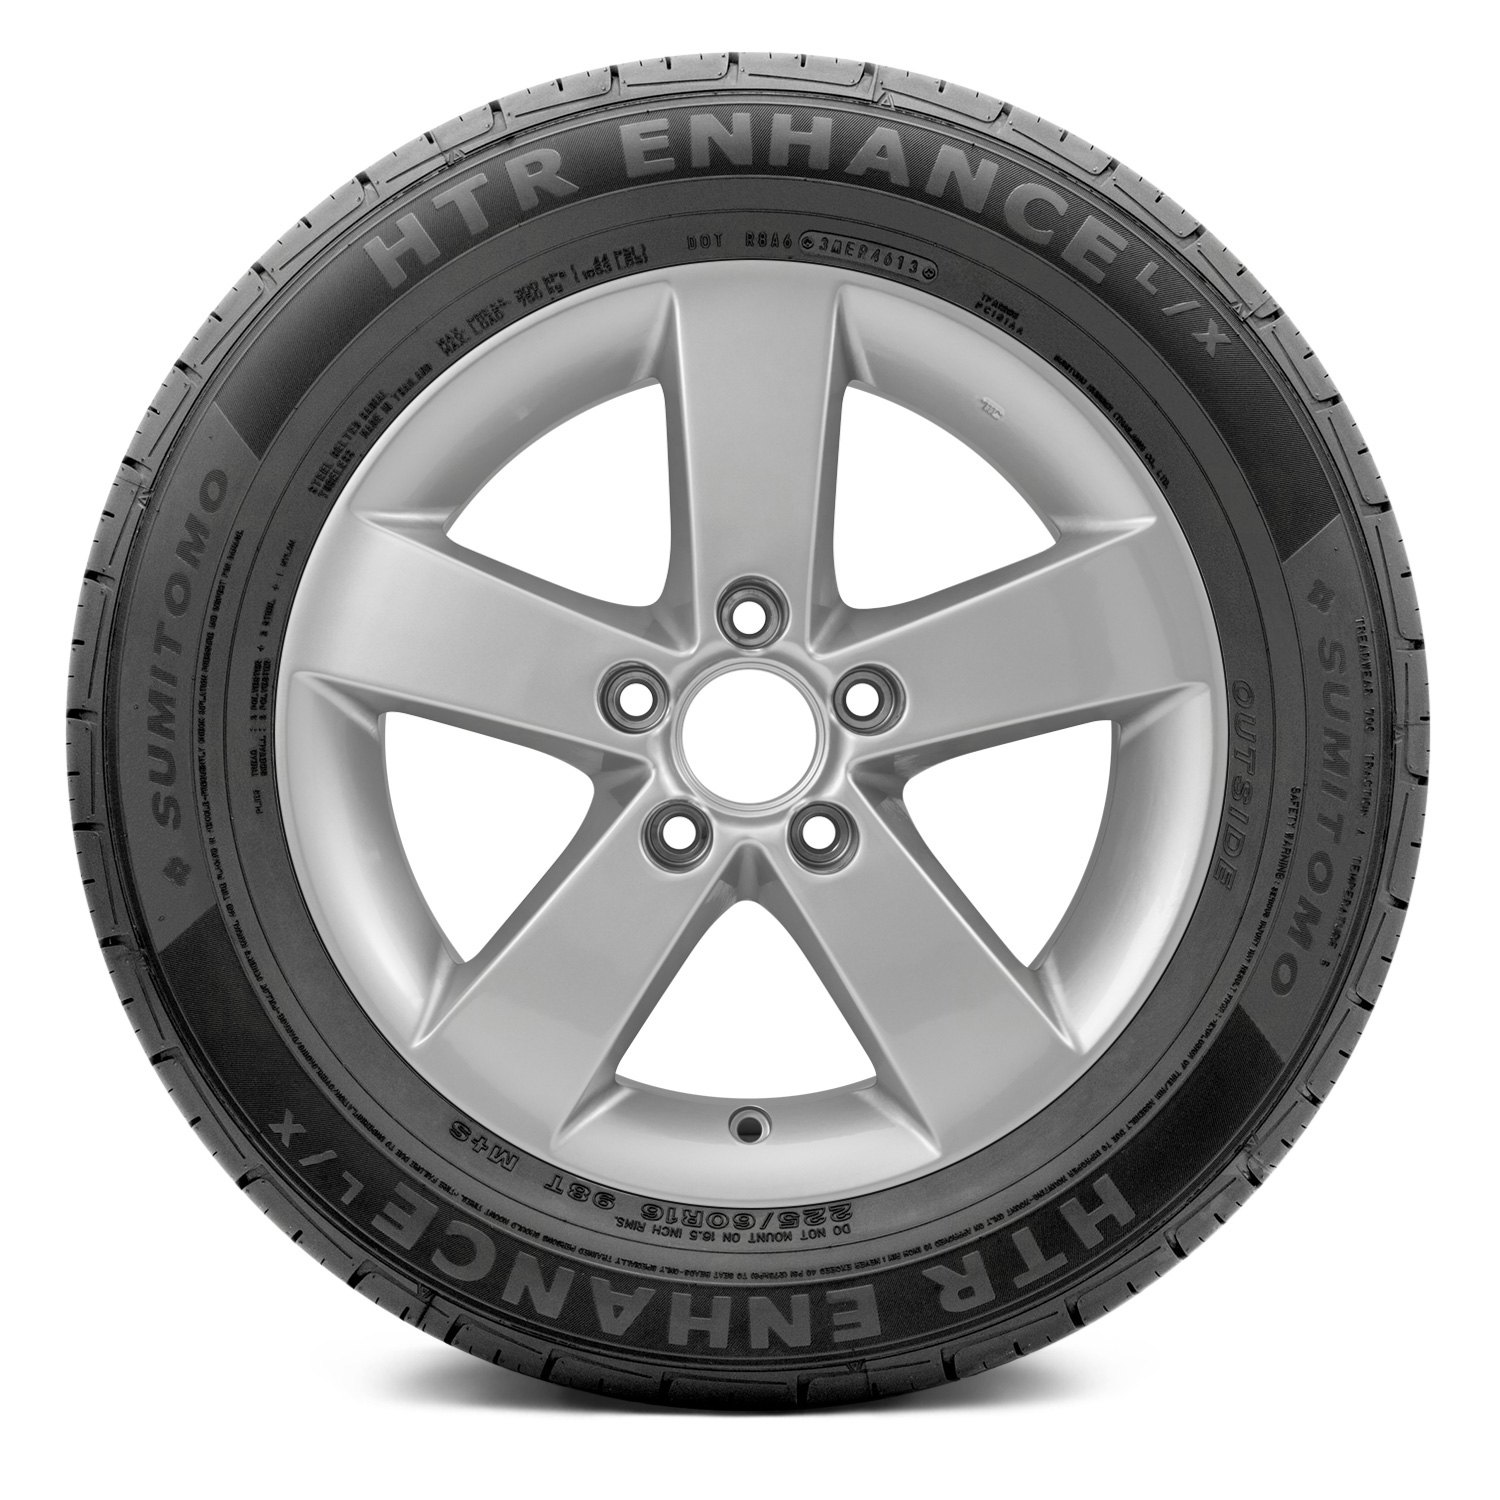 Sumitomo Tires® Htr Enhance L X Tires